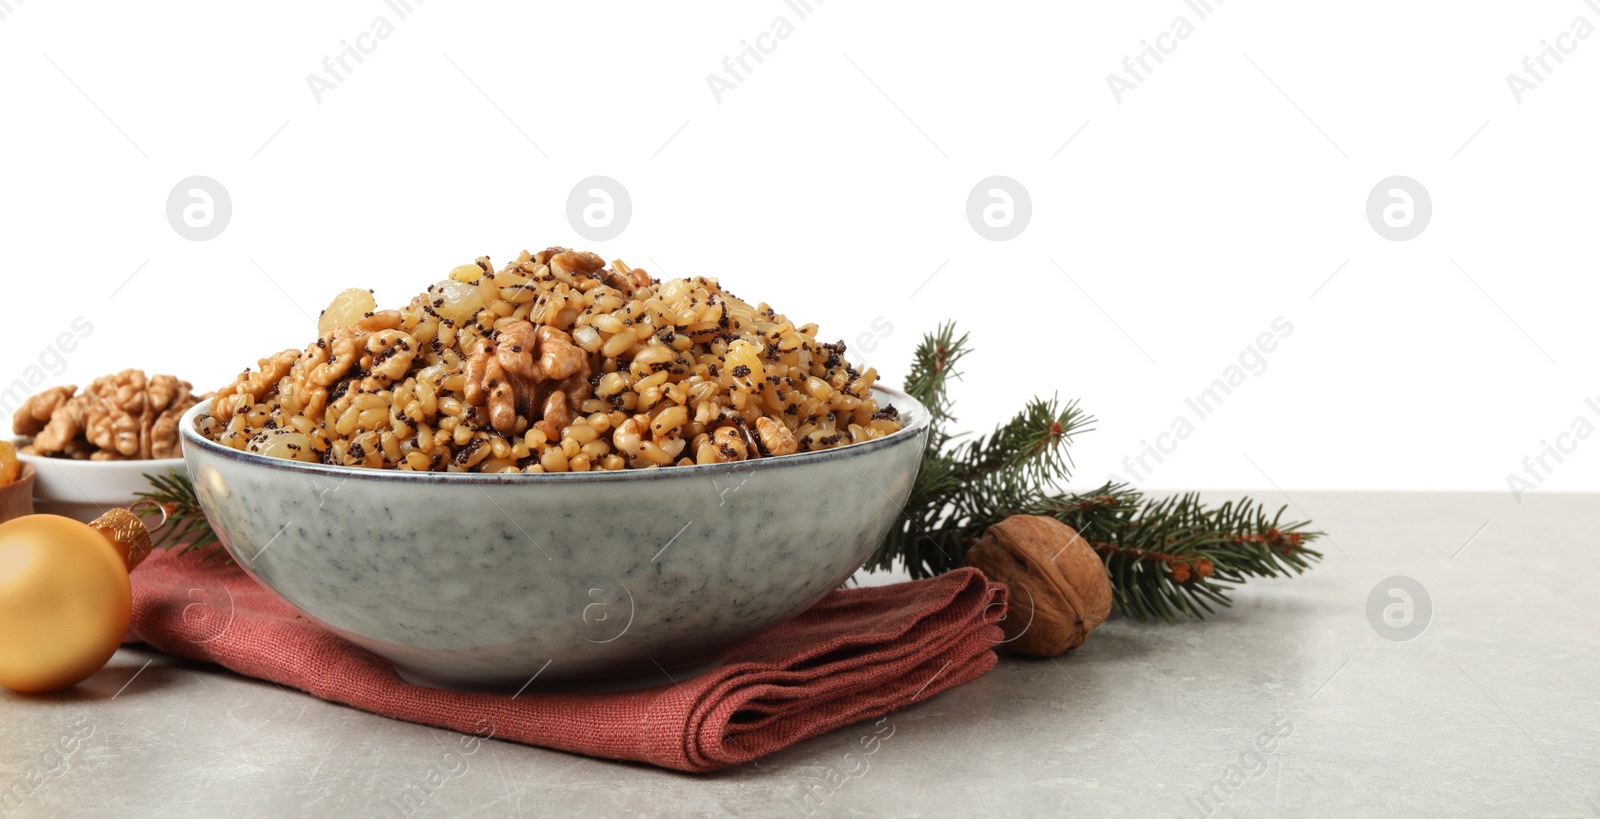 Photo of Traditional Christmas slavic dish kutia on light grey table against white background